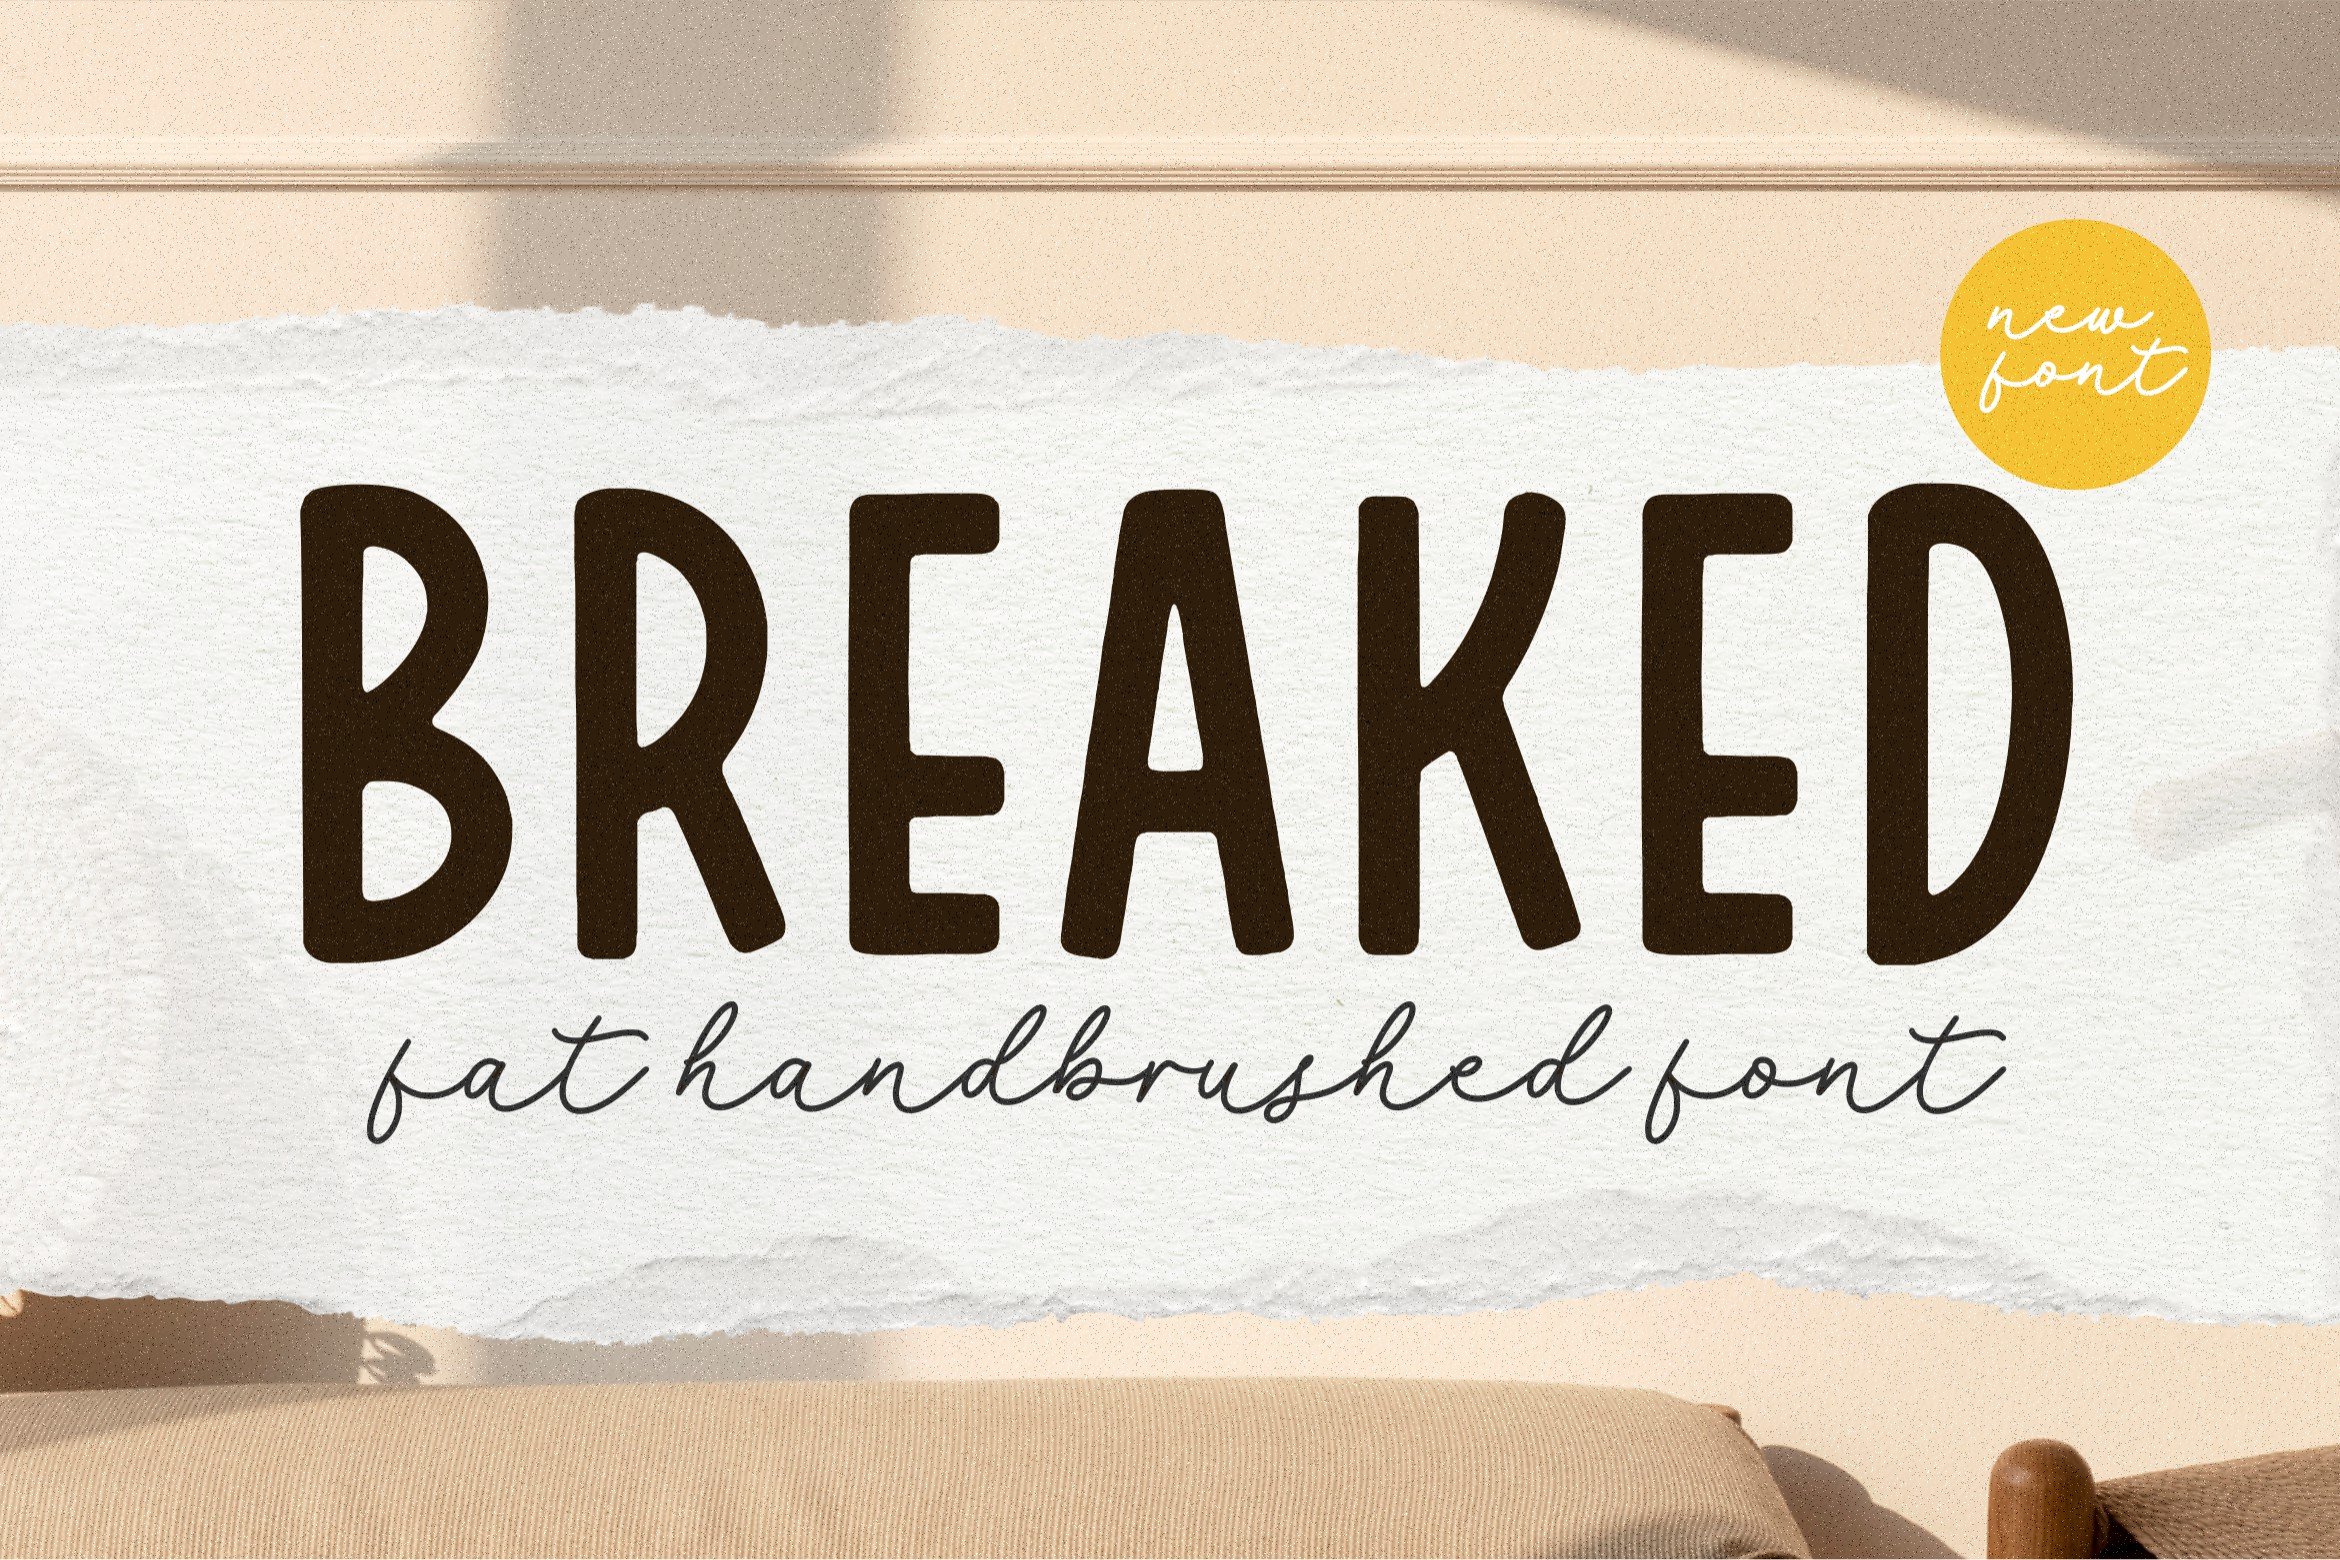 BREAKED - Handbrushed Font cover image.